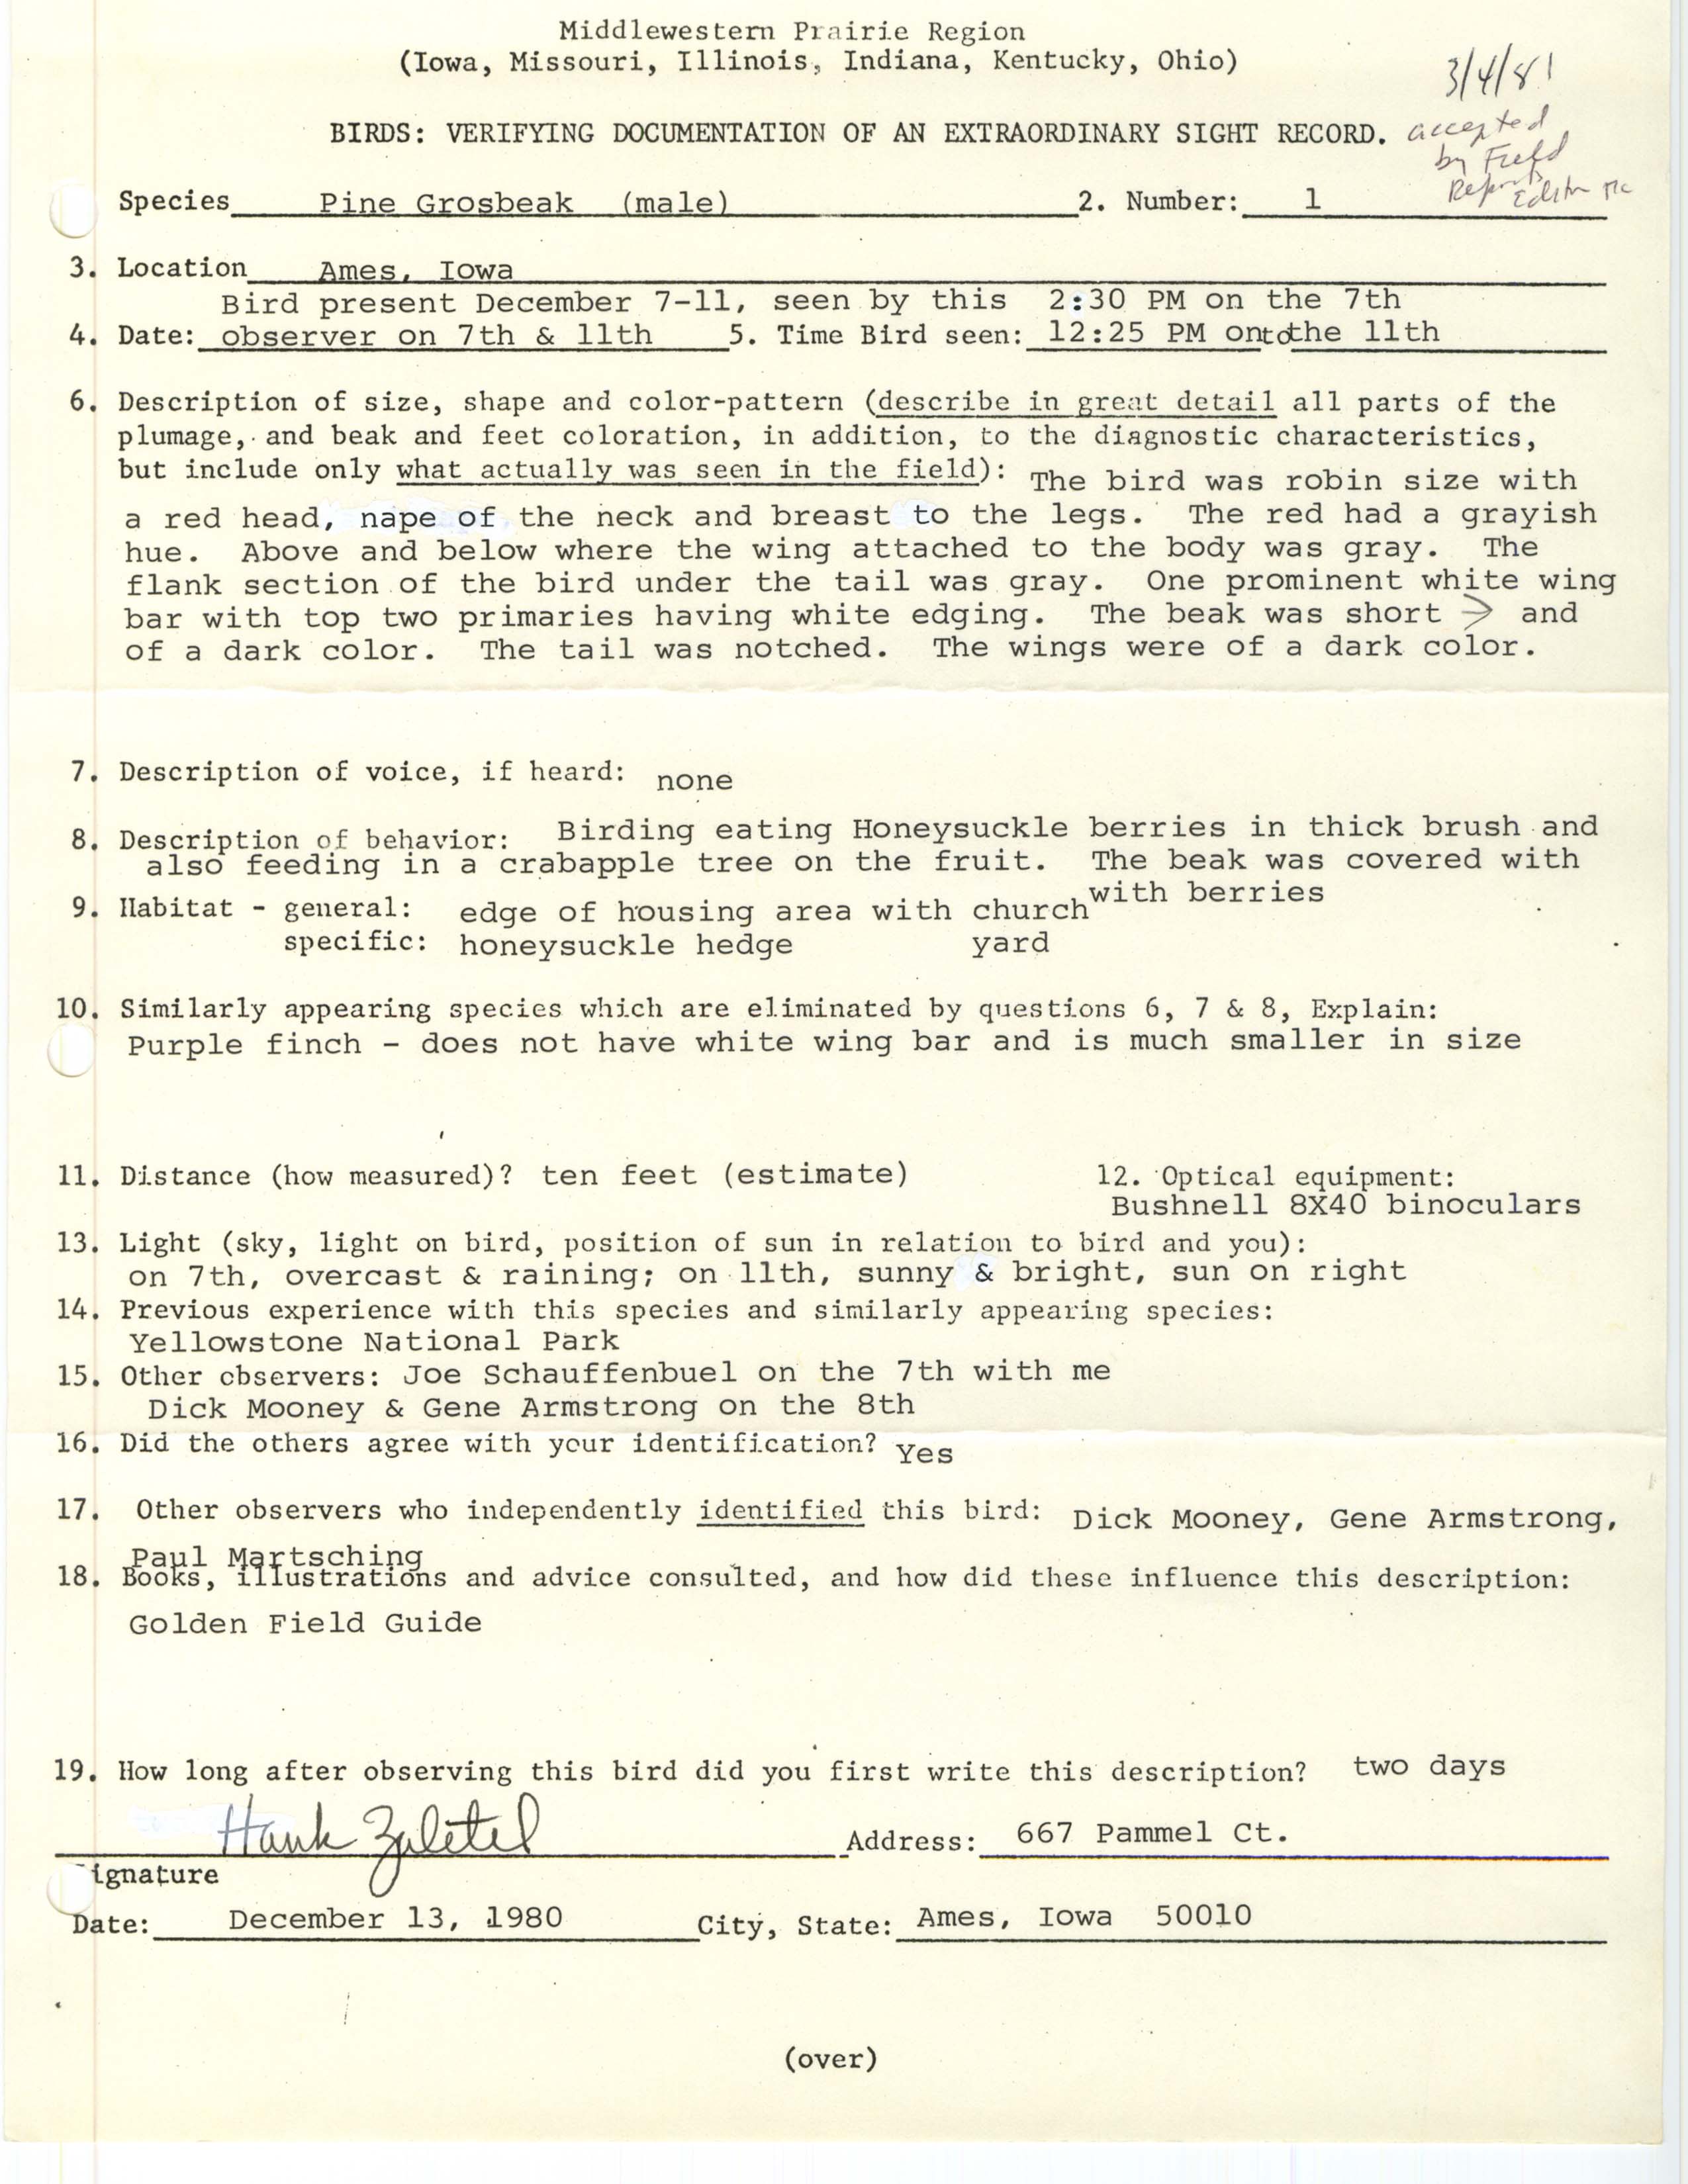 Rare bird documentation form for Pine Grosbeak at Ames in 1980